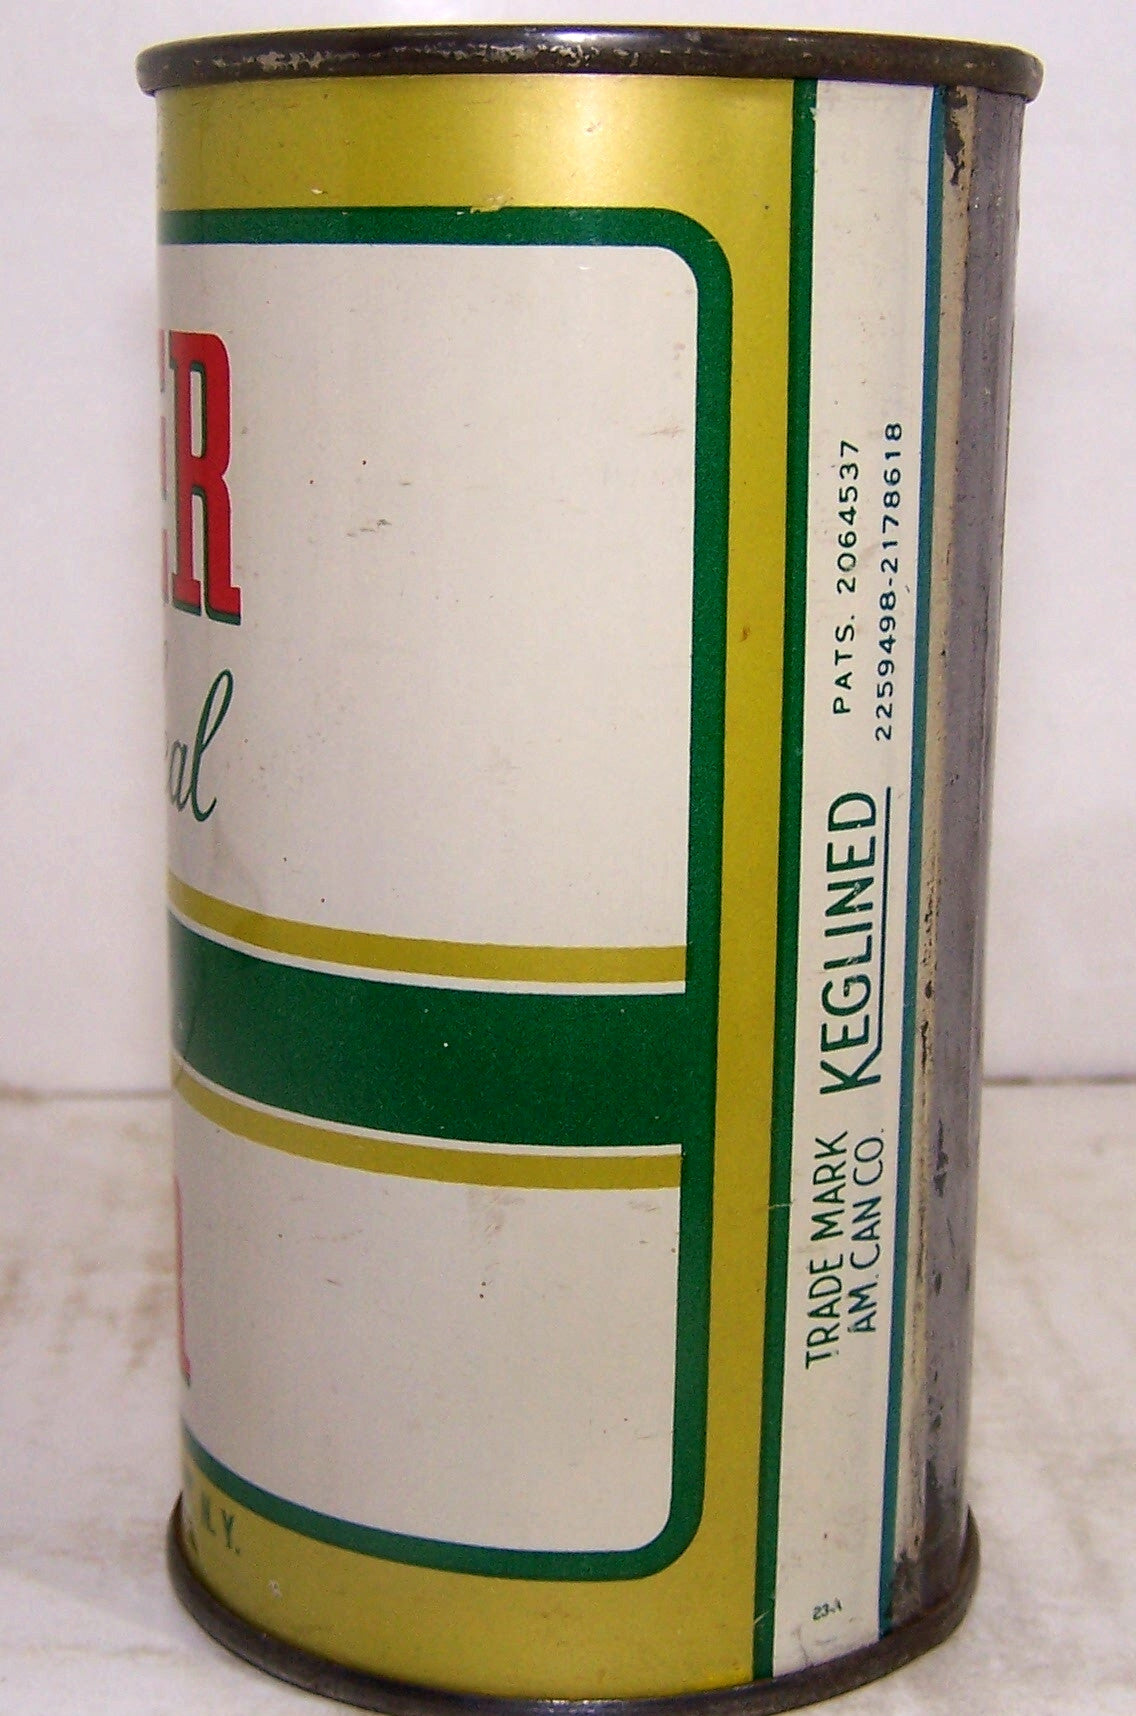 Dobler Private Seal Beer, USBC 54-12, Grade A1+ Sold on 05/15/16